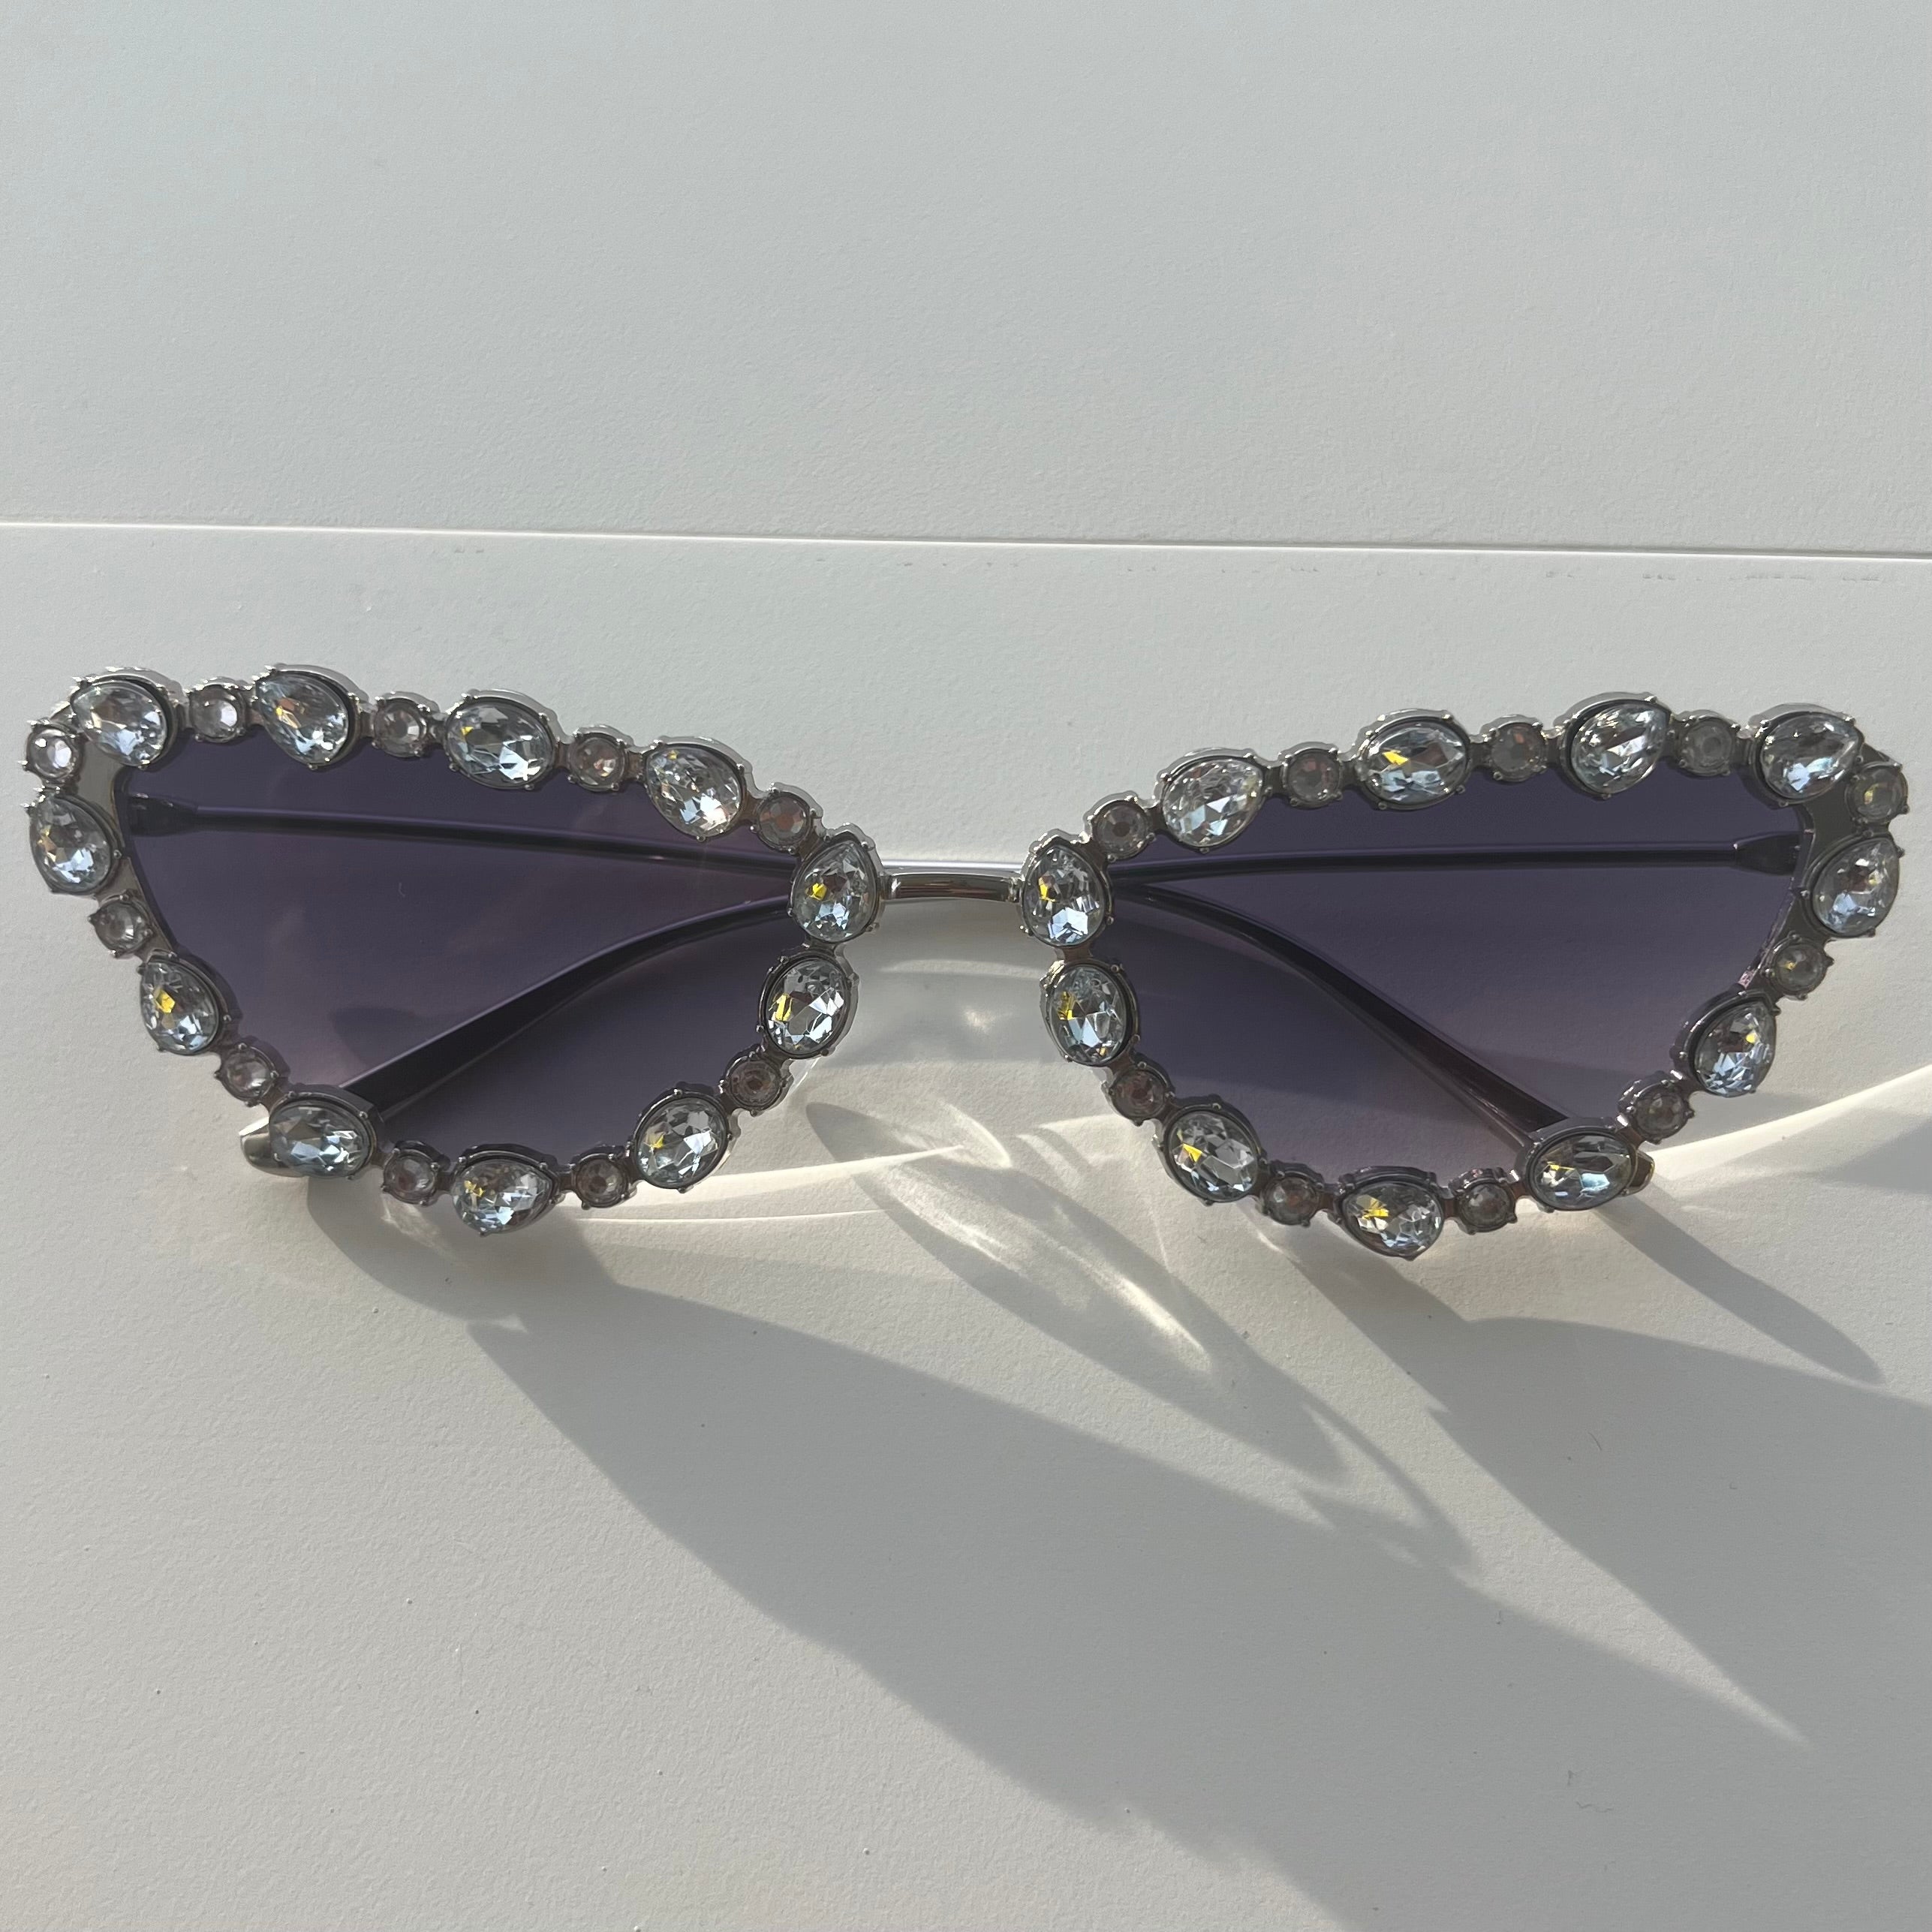 Bejeweled : Sunglasses